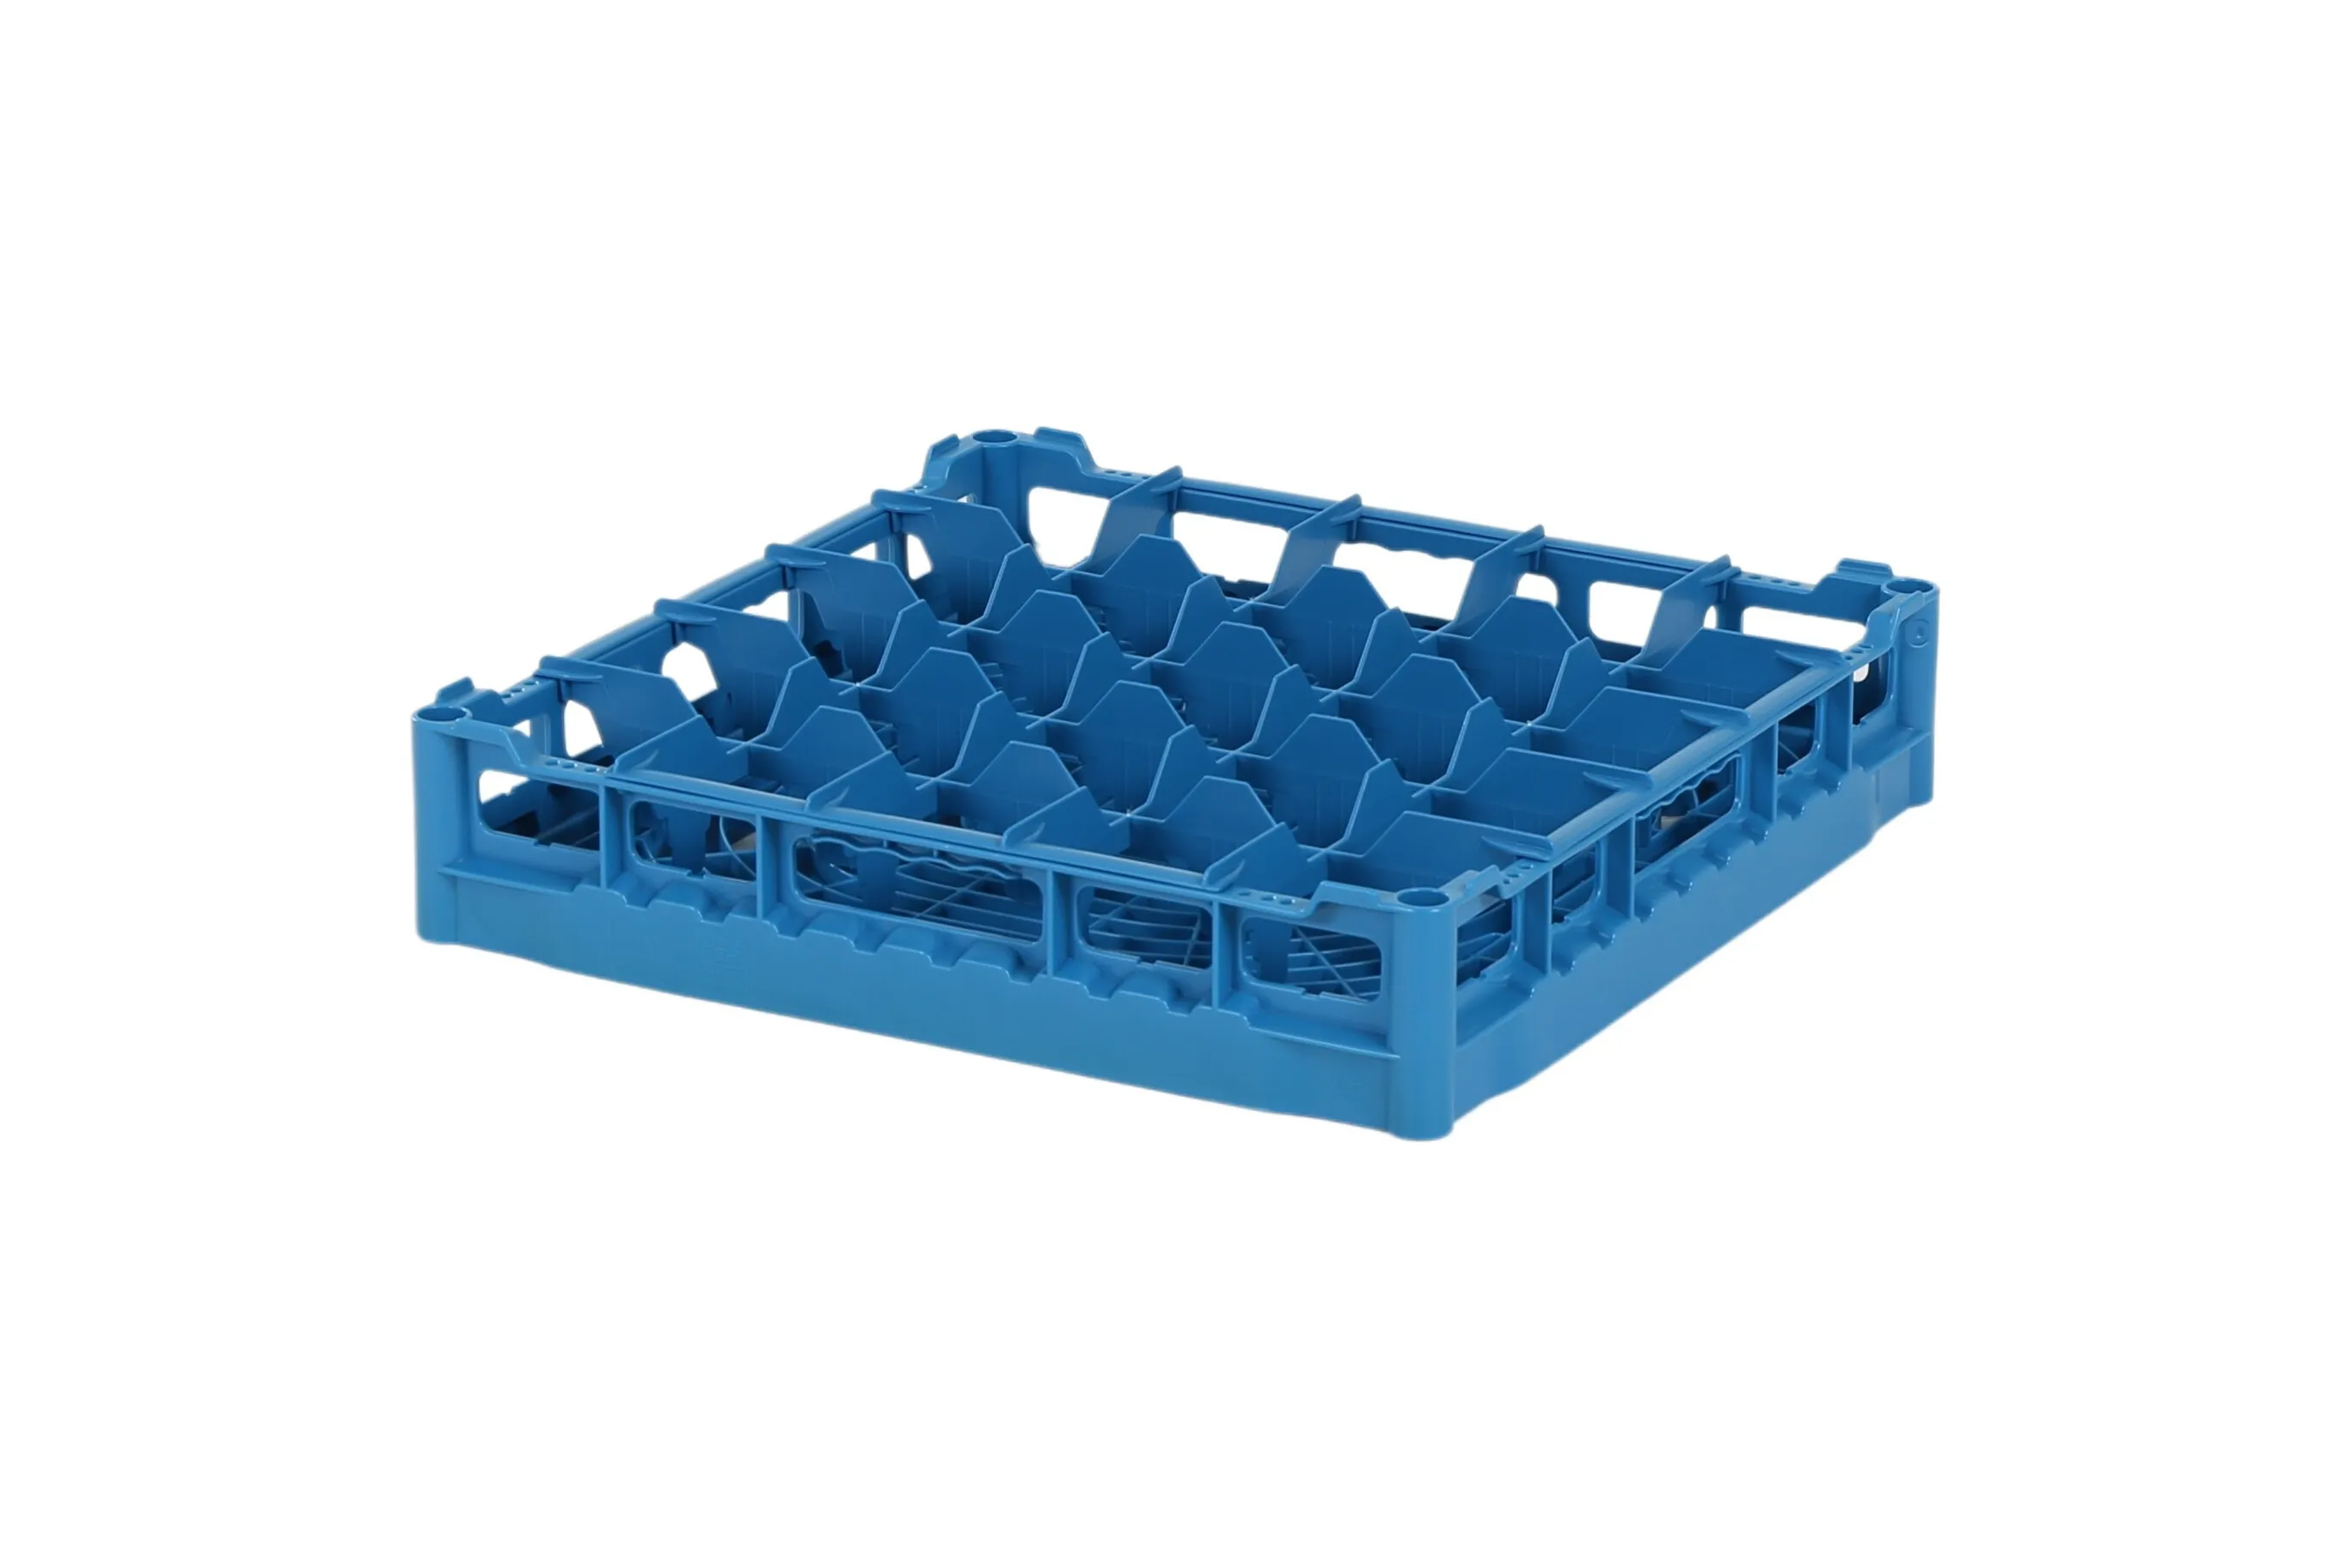 Glass basket 500x500mm blue - maximum glass height 73 mm - with blue 5x5 compartmentalization - maximum glass Ø 90mm.